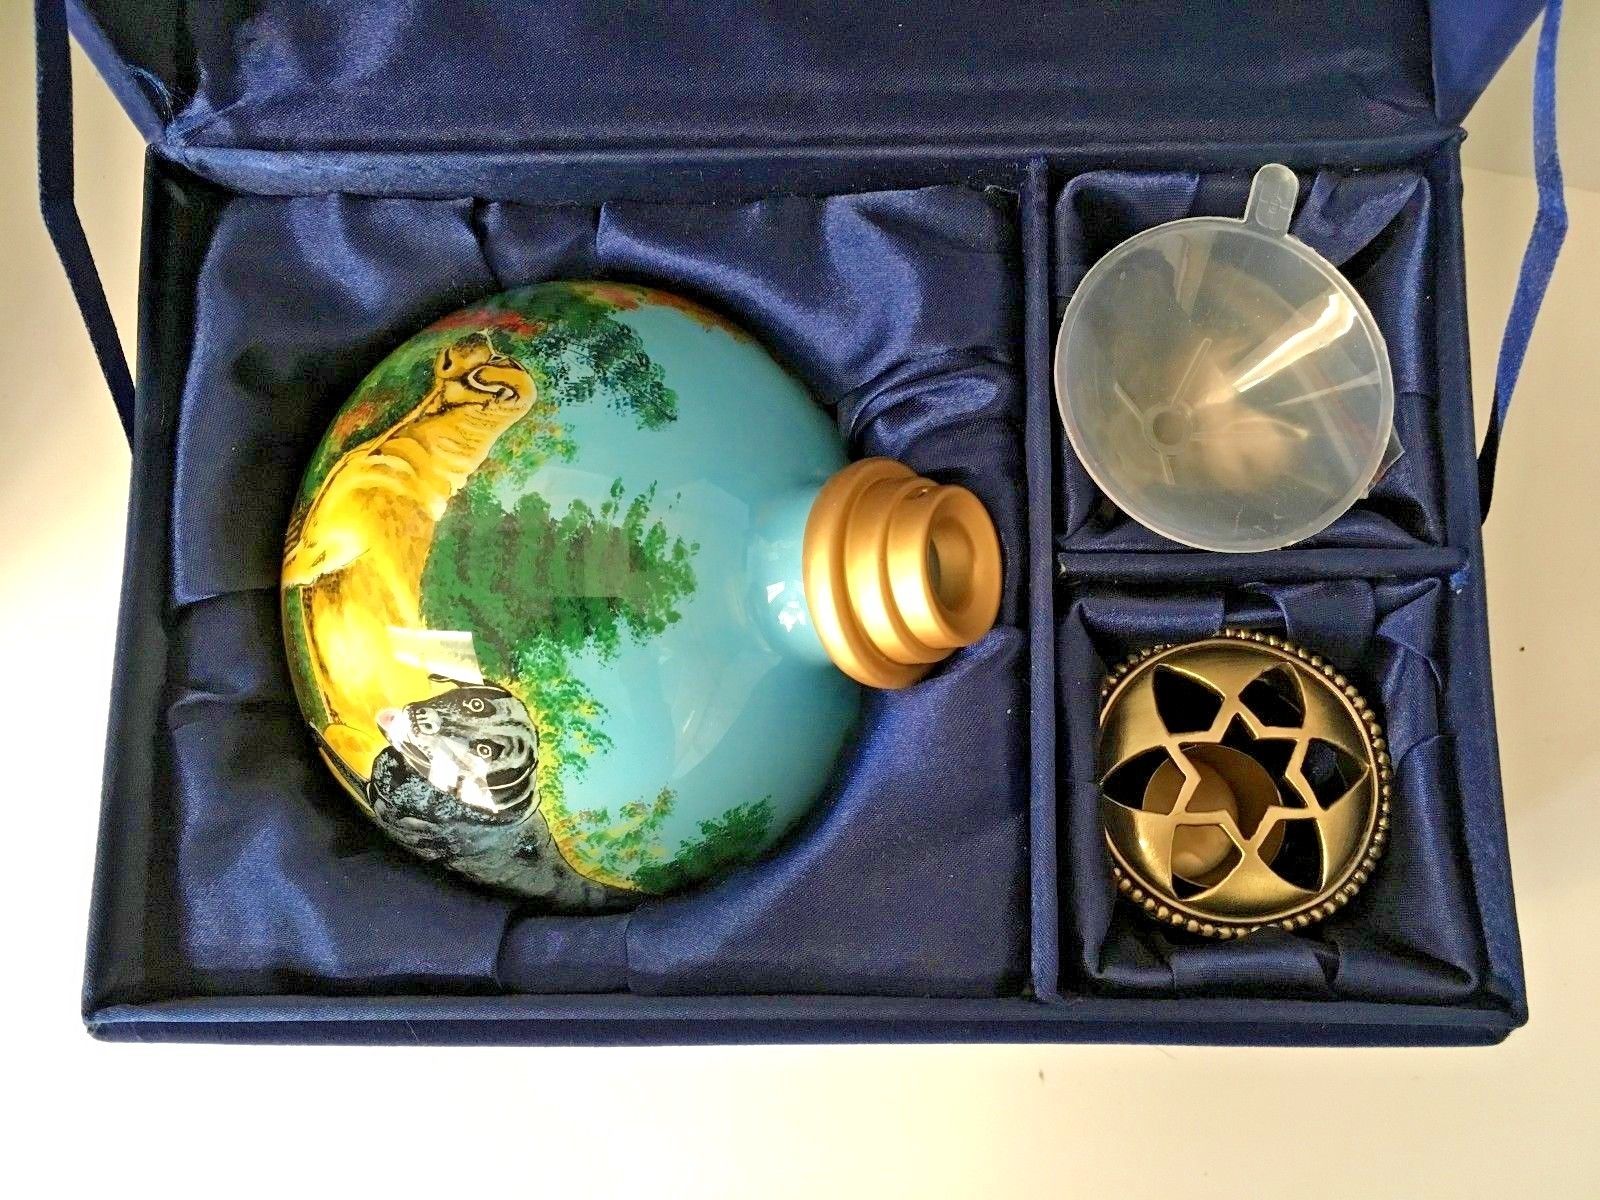 Companion Fragrance Lamp Collection by Ne Qwa Art & Robert Schmidt